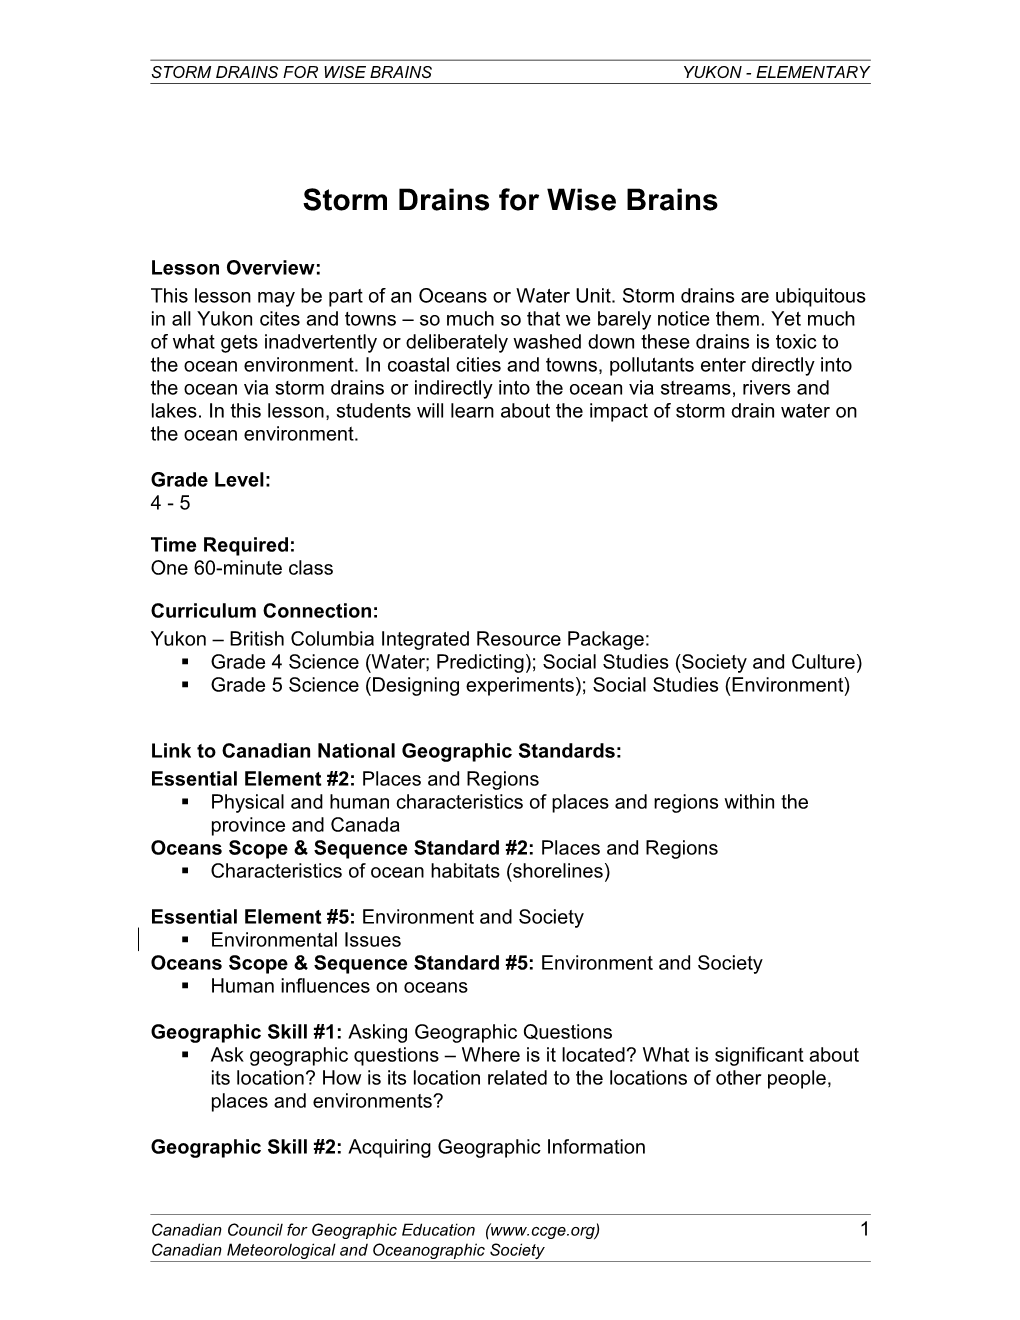 Storm Drains for Wise Brainsyukon - Elementary